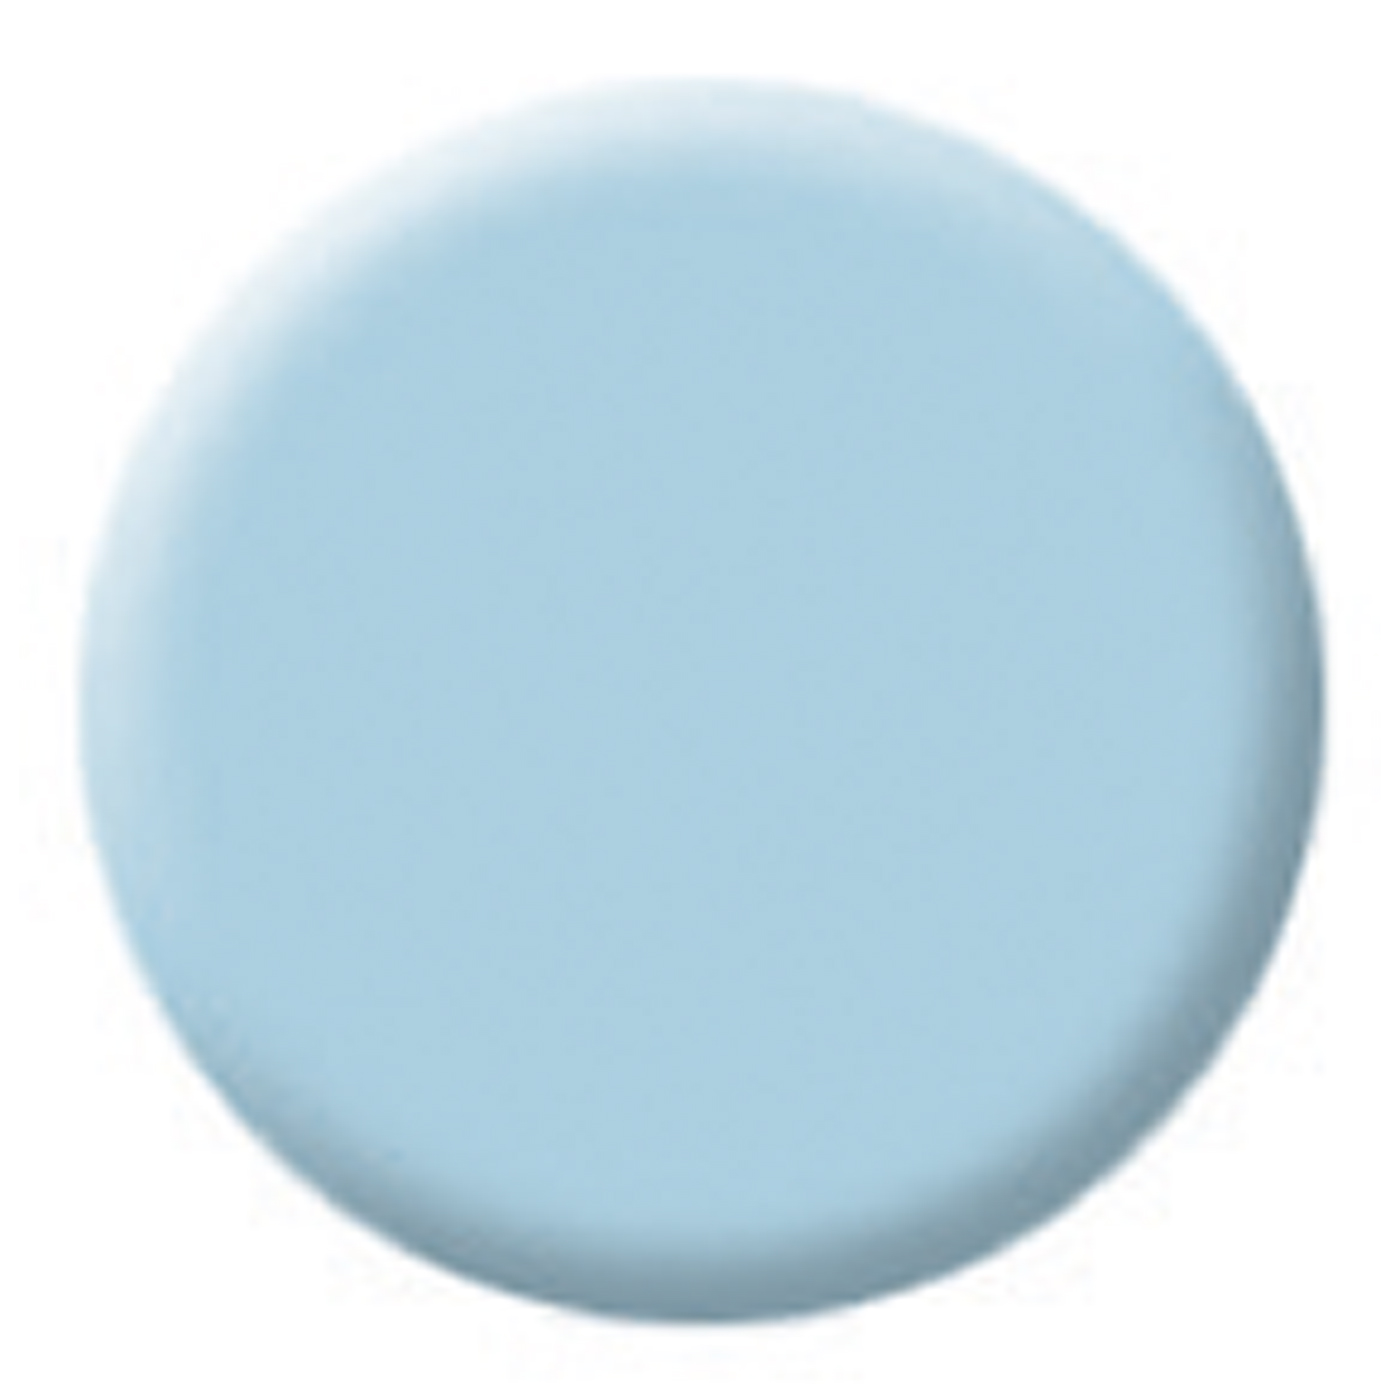 Colorit Trend transparent, ice blue - 5 g